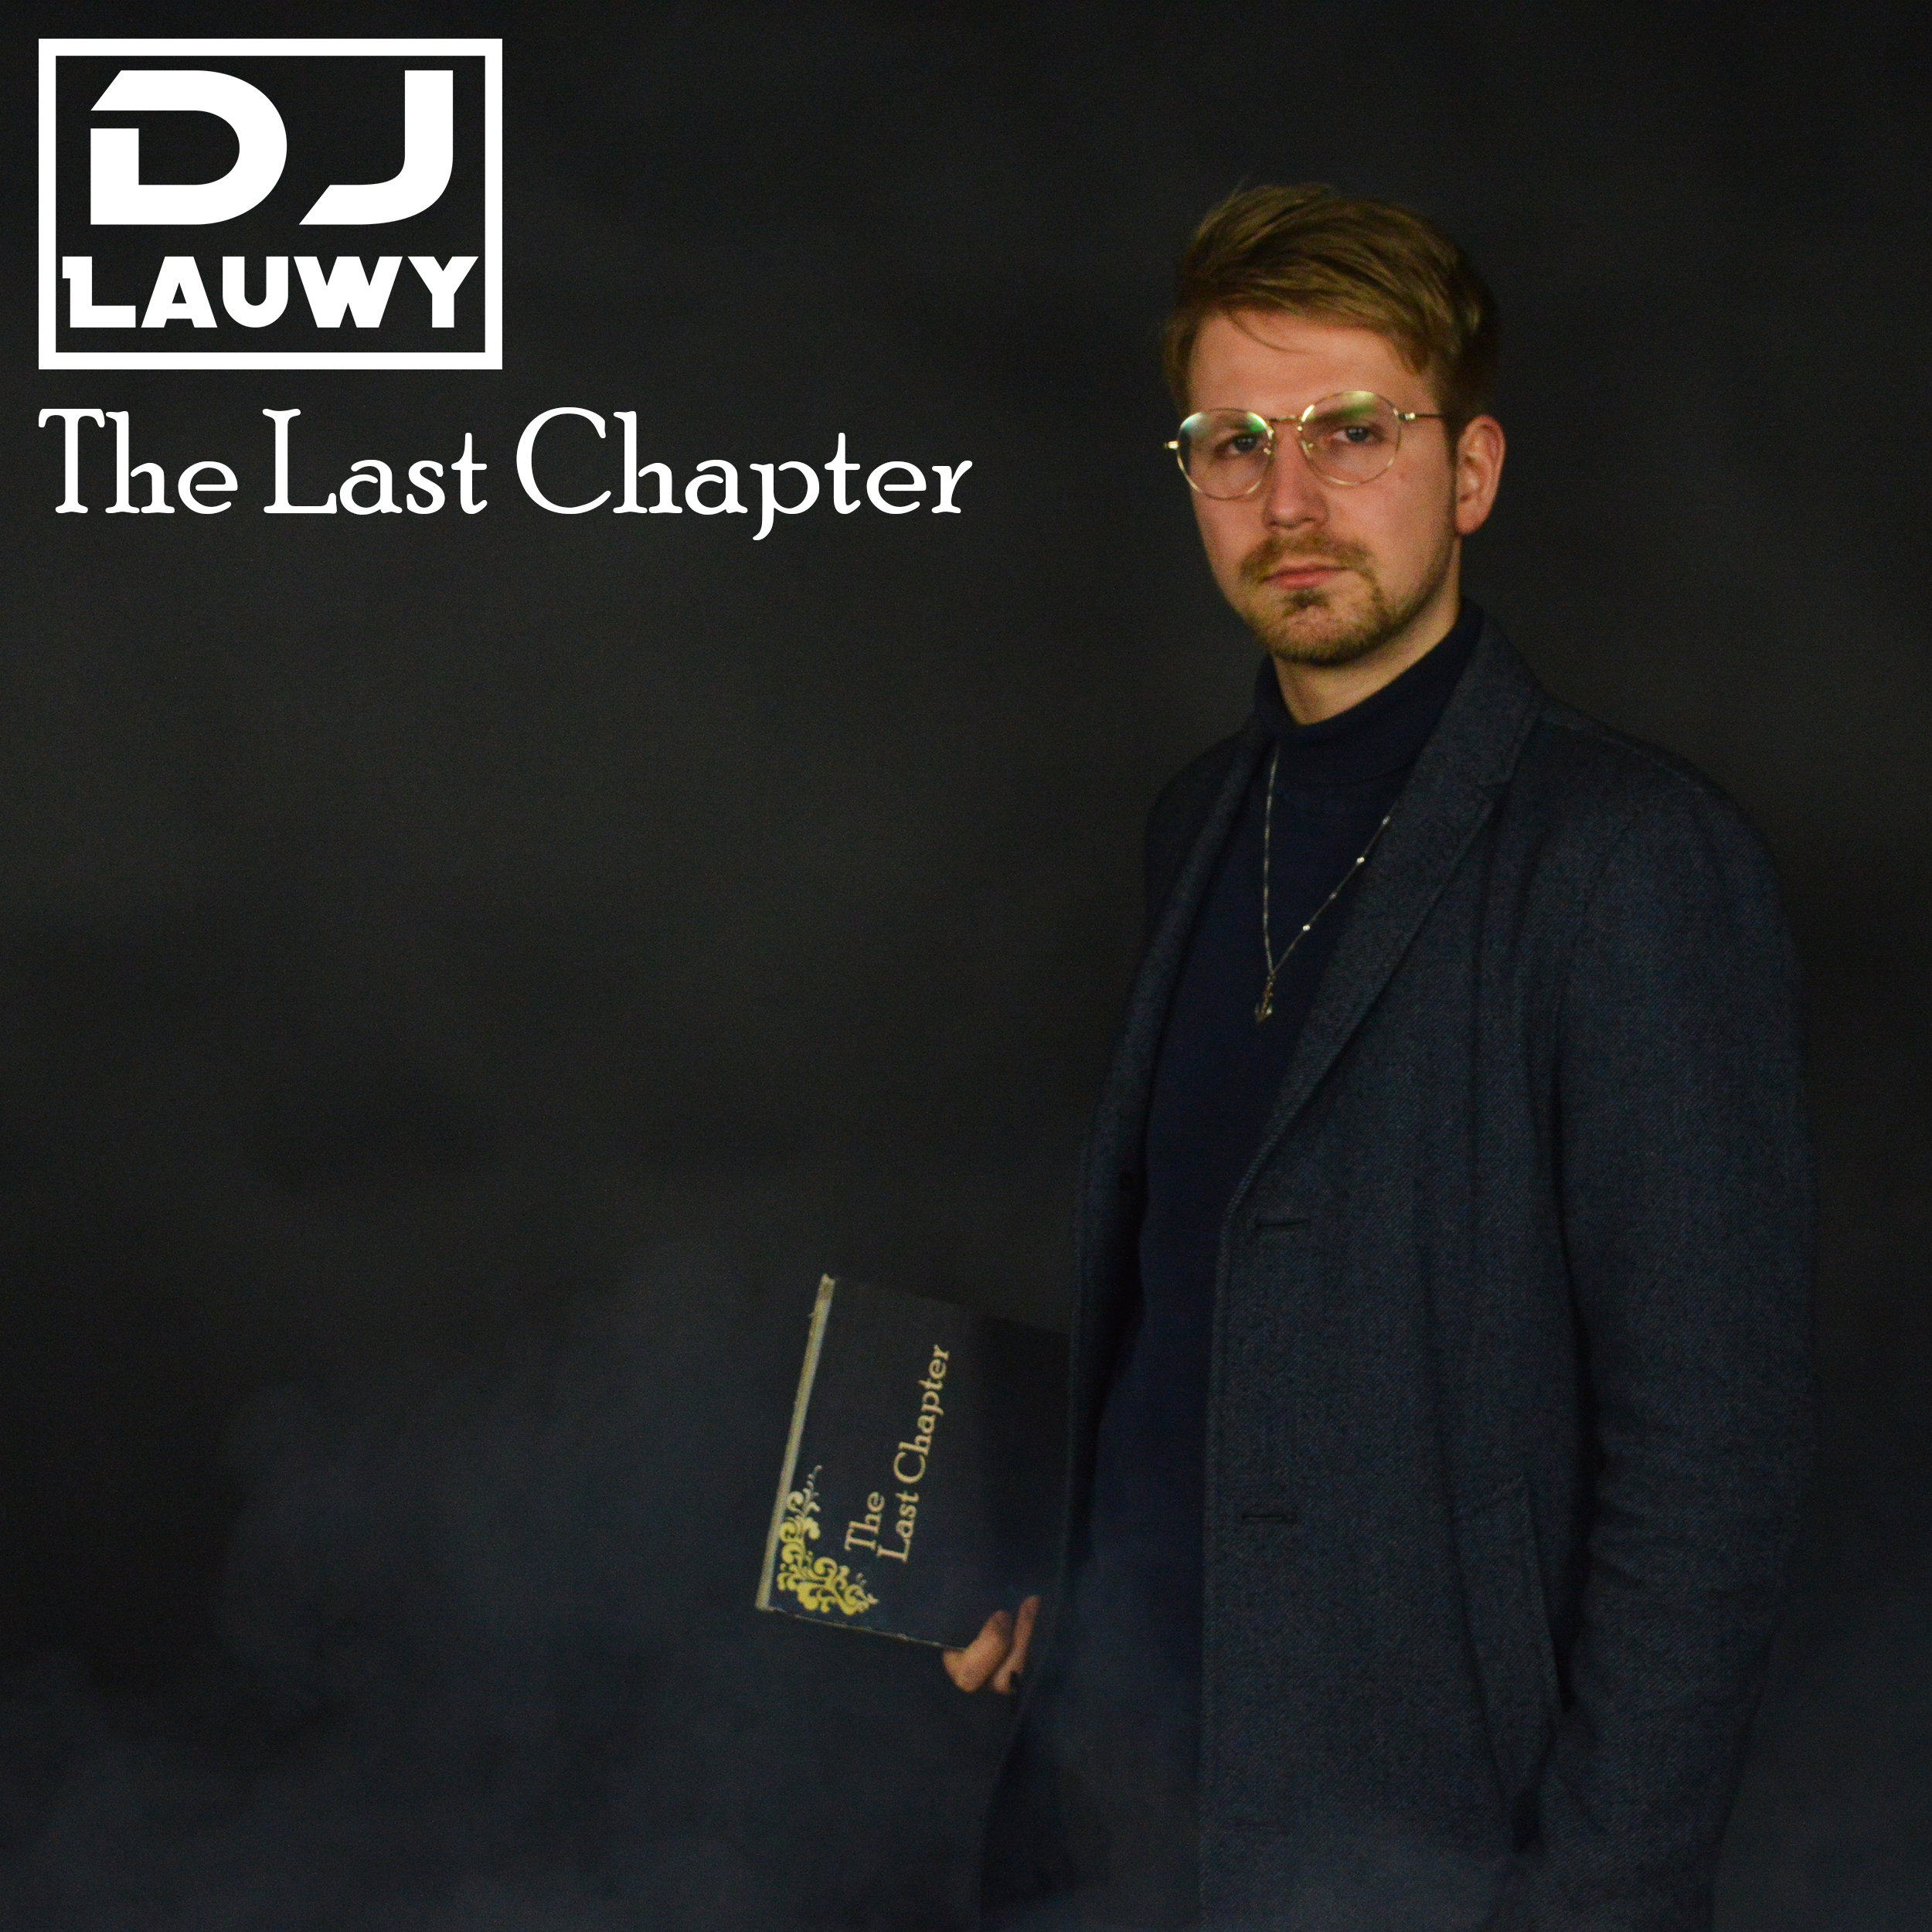 The Last Chapter album cover art